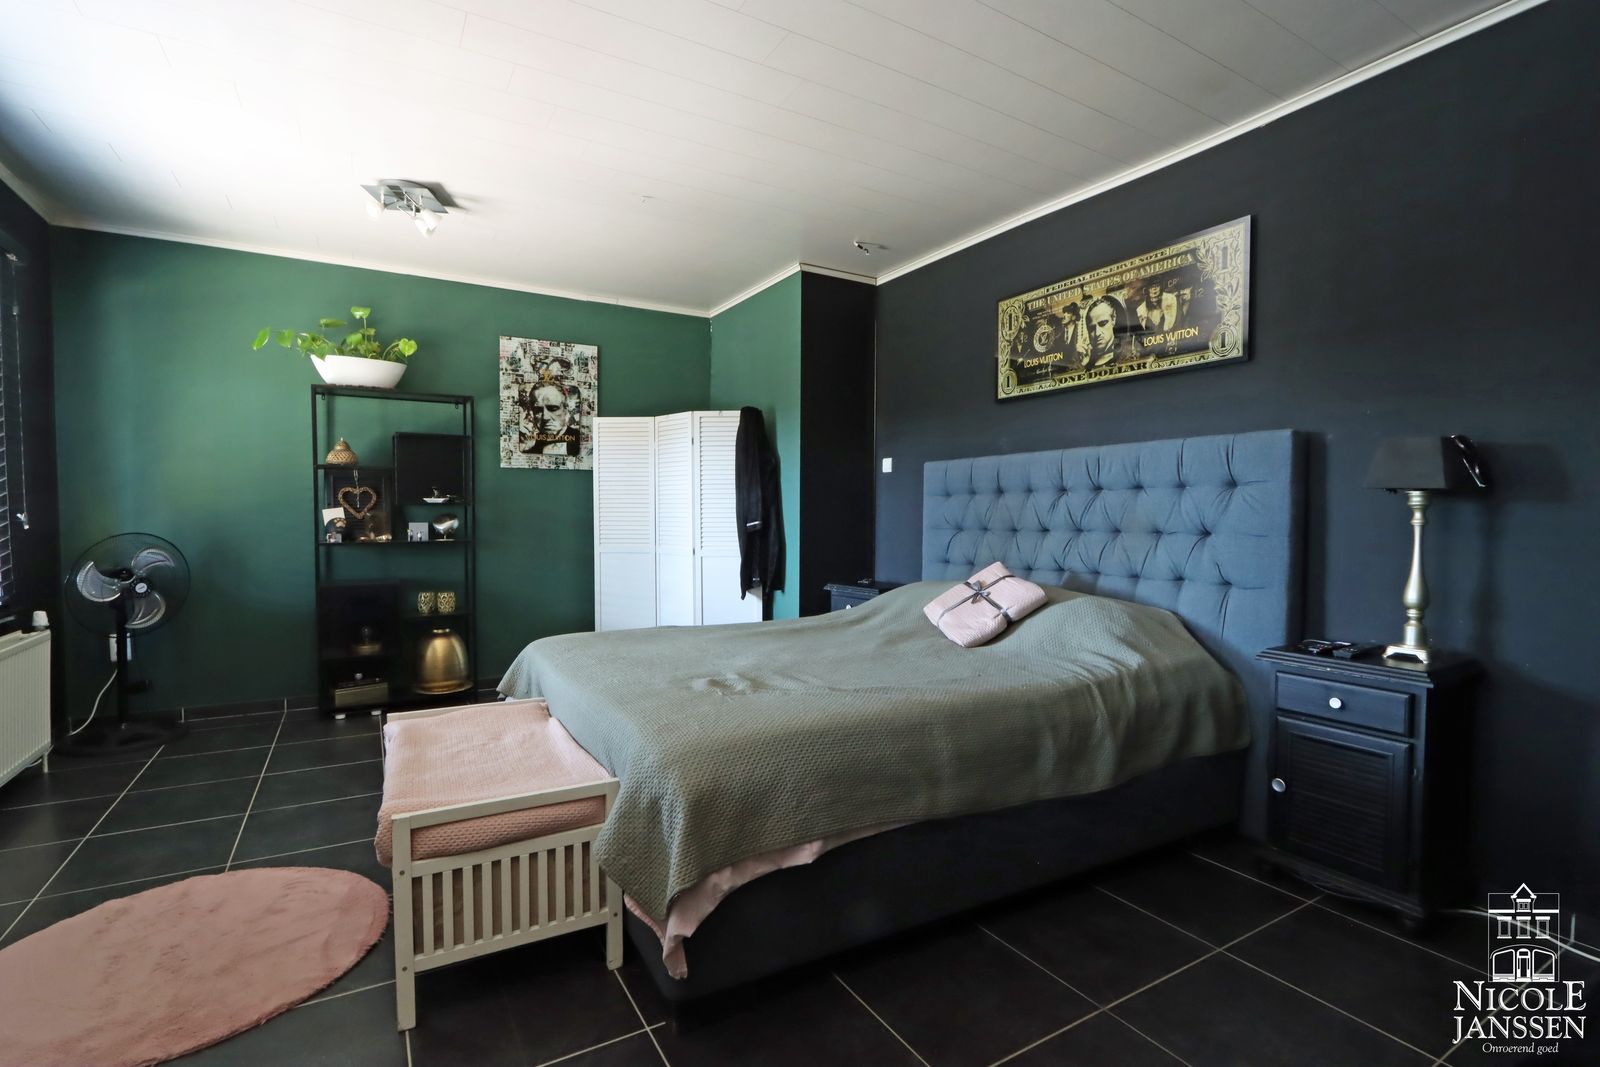 10 Nicole Janssen huis te koop Kessenich Venlosesteenweg 359 (slaapkamer).jpg